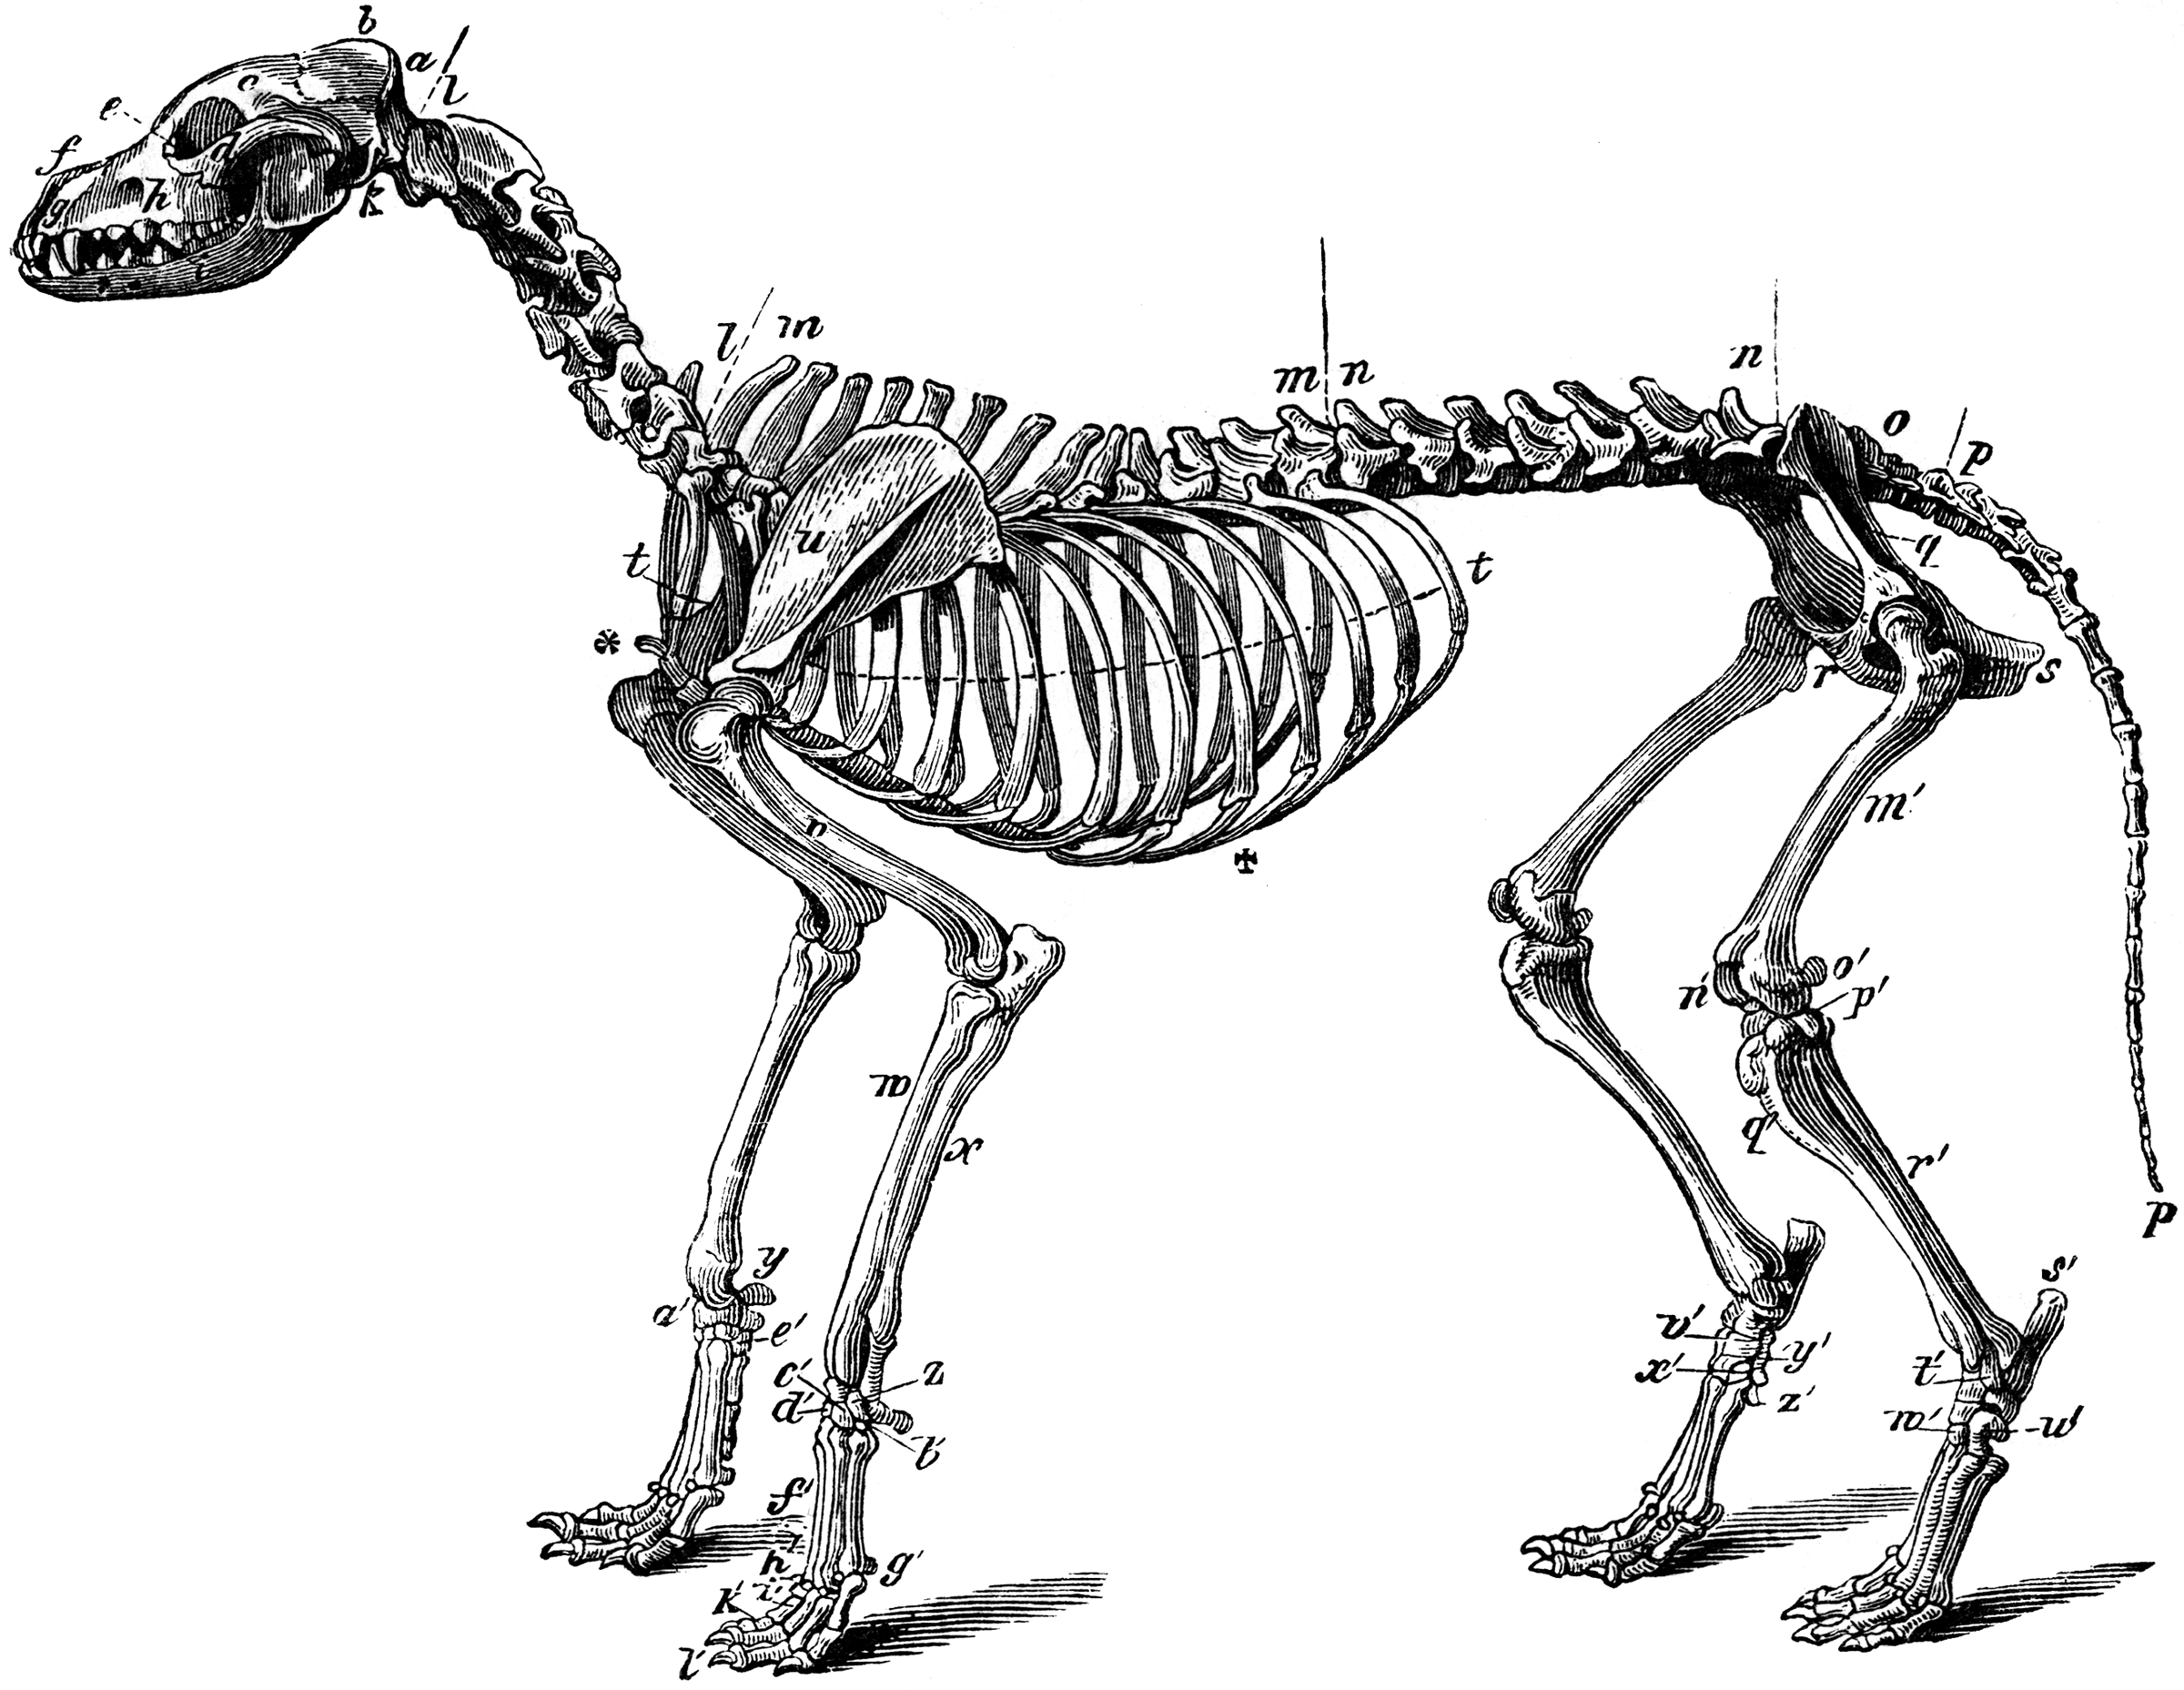 Skeleton of a Dog | ClipArt ETC human foot diagram 